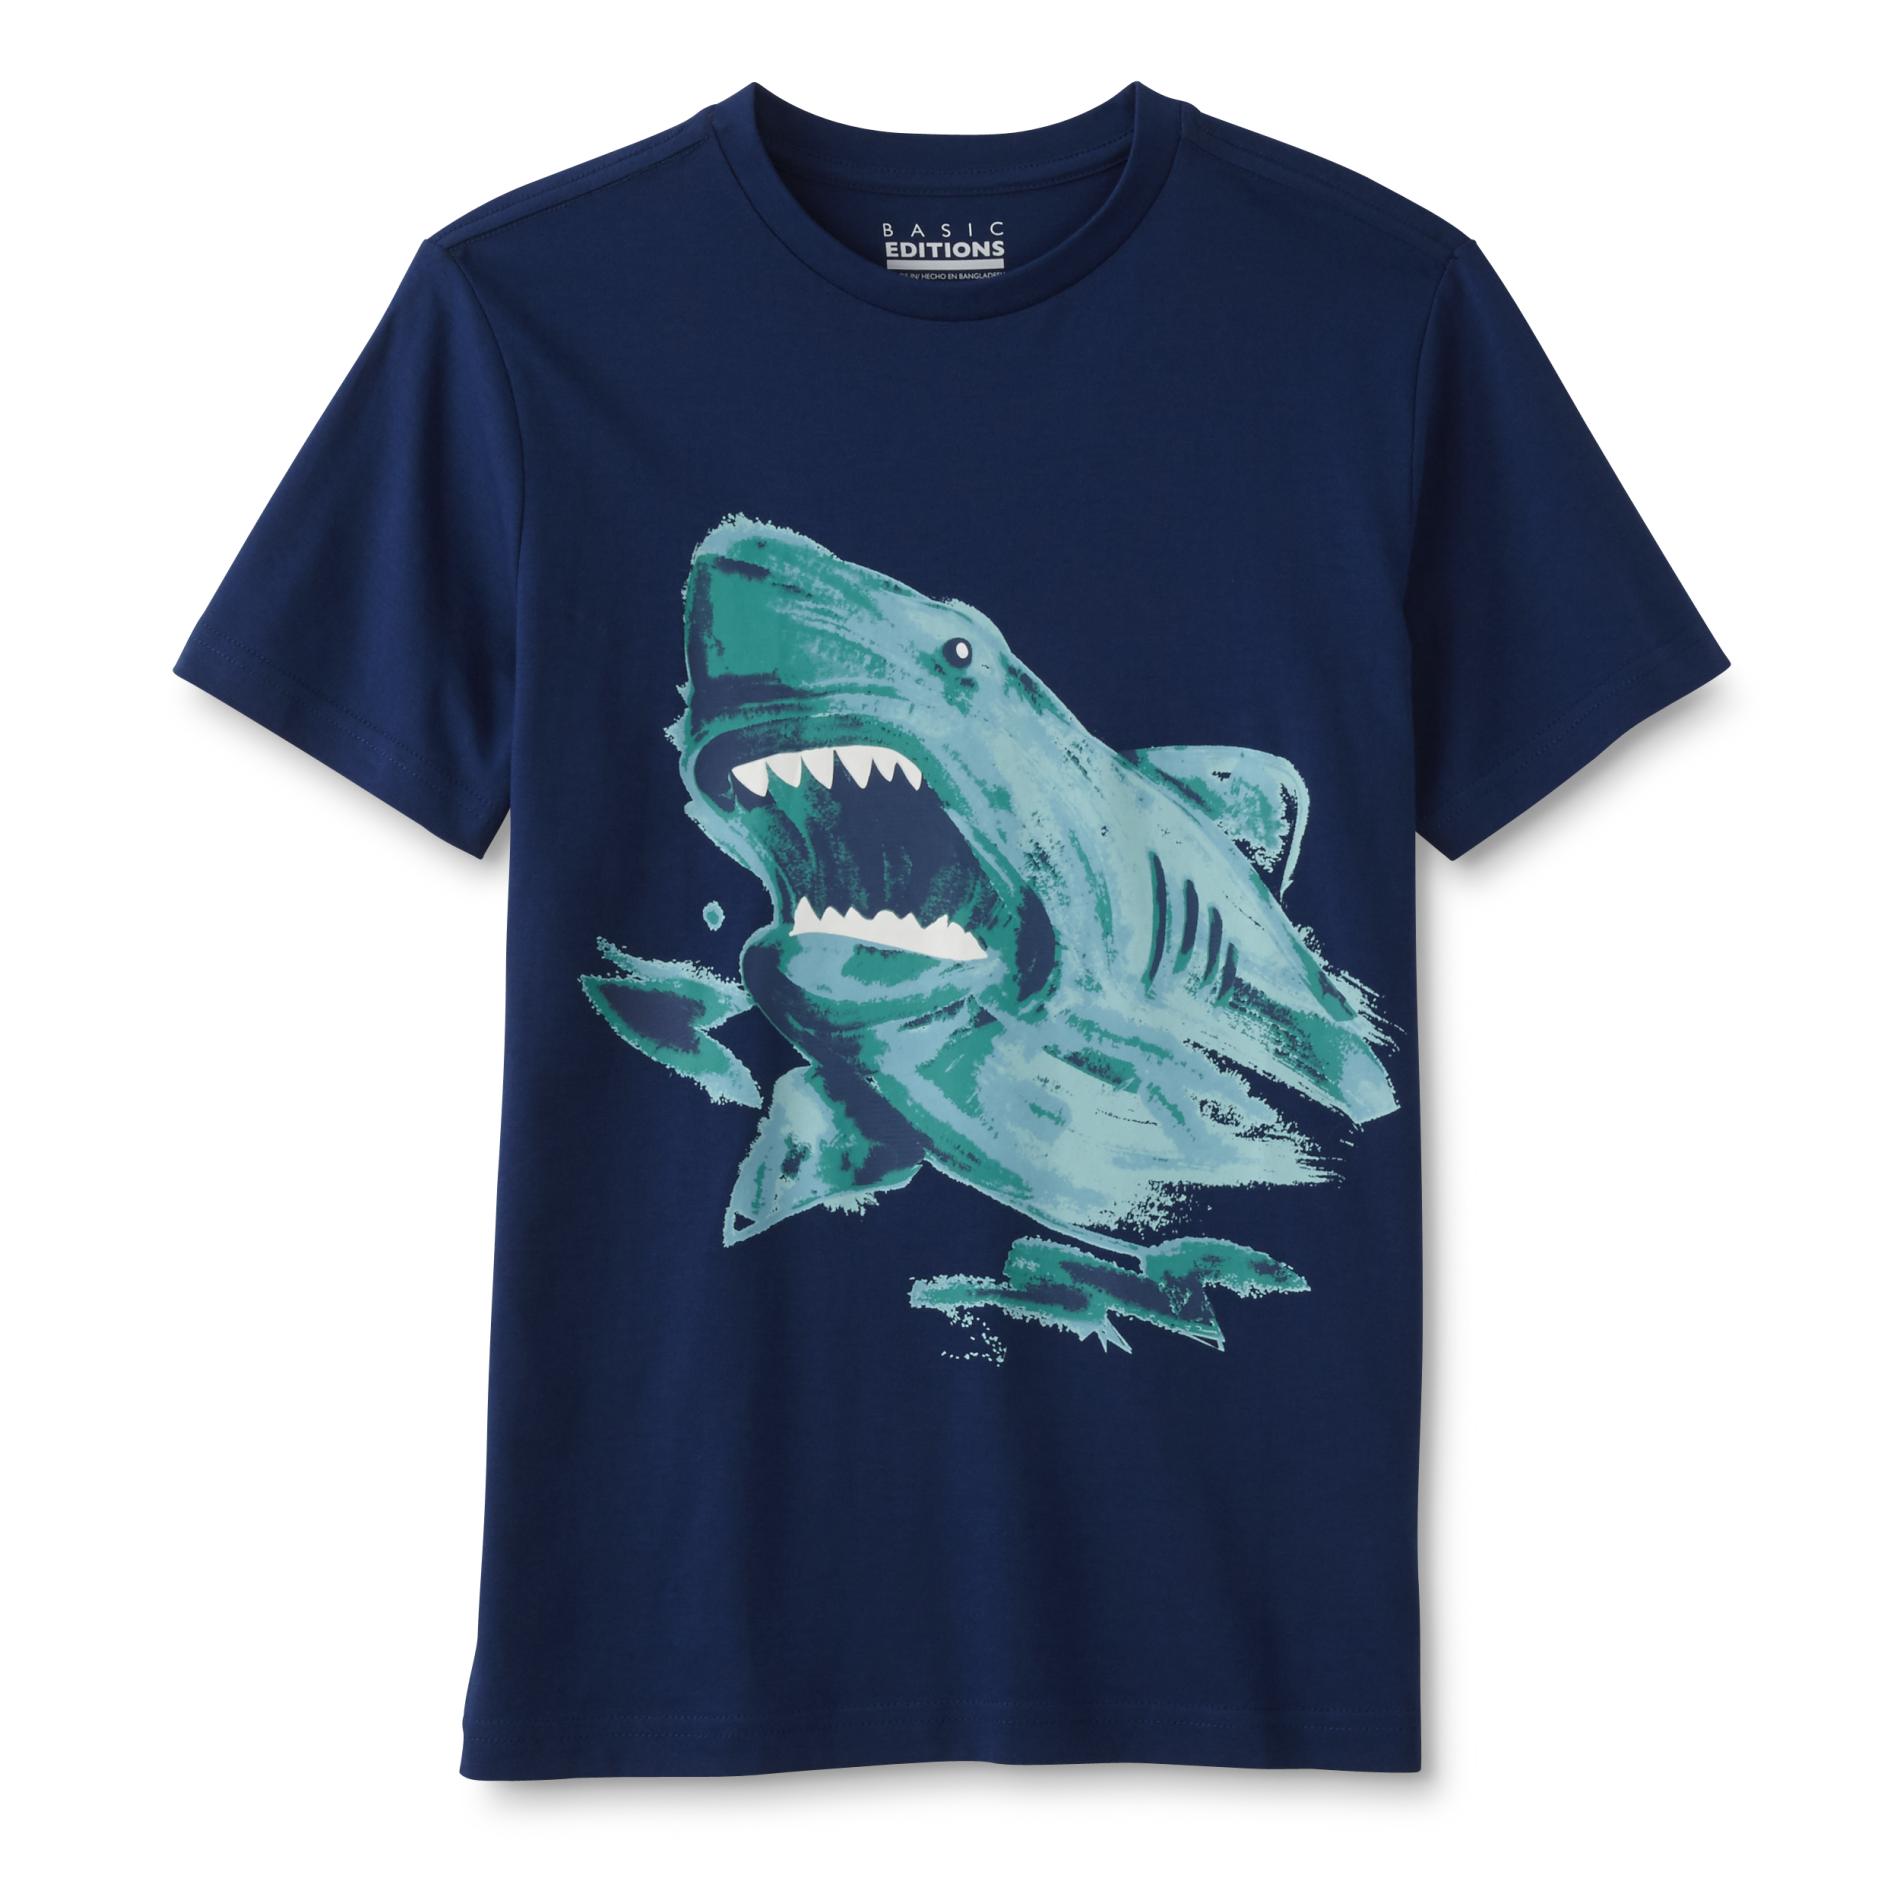 Basic Editions Boys' Graphic T-Shirt - Shark